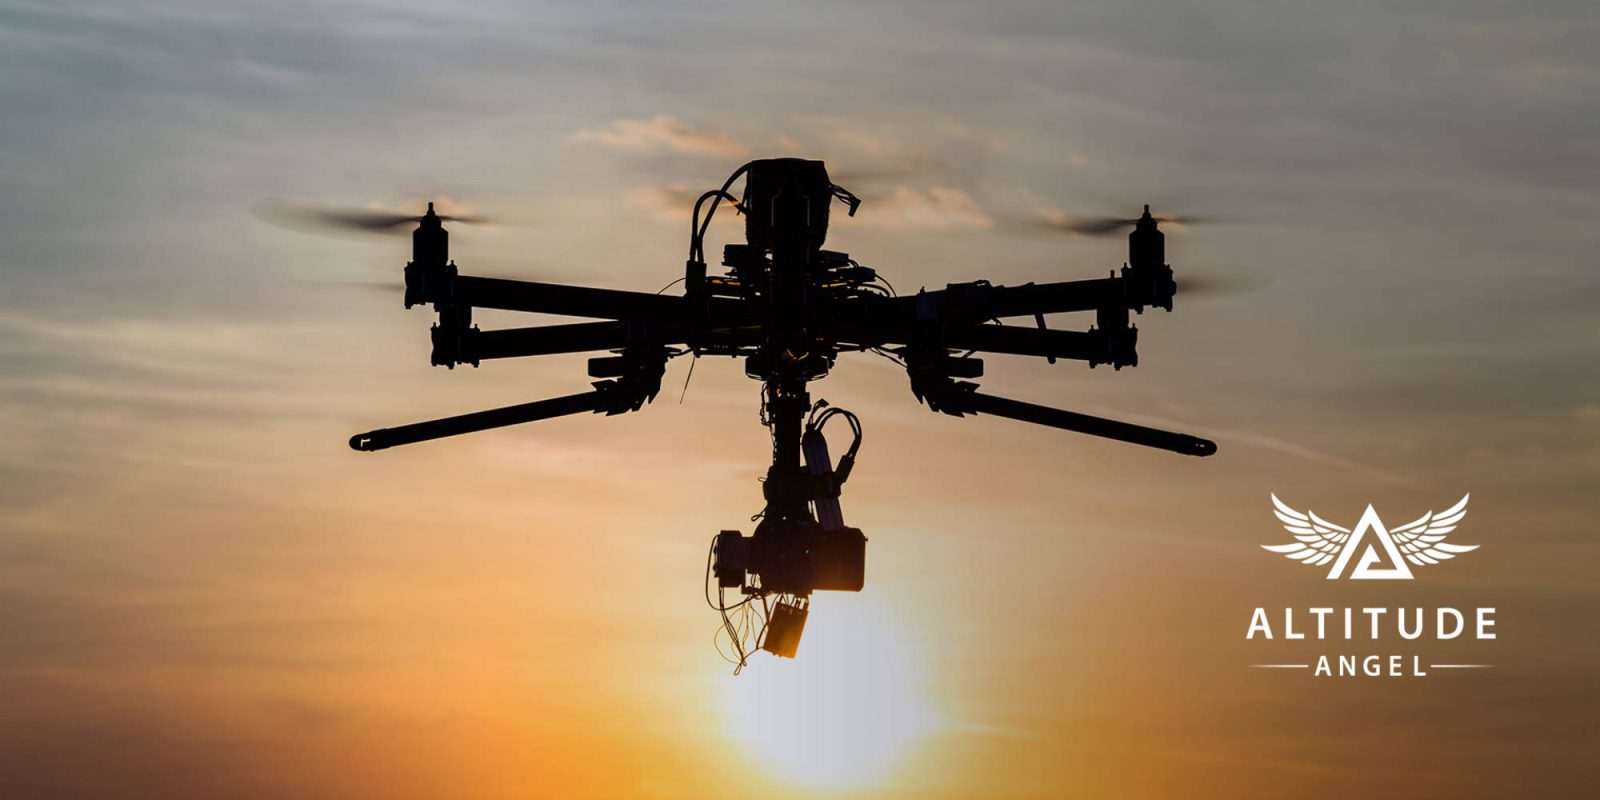 Altitude Angel 'future flight' drones